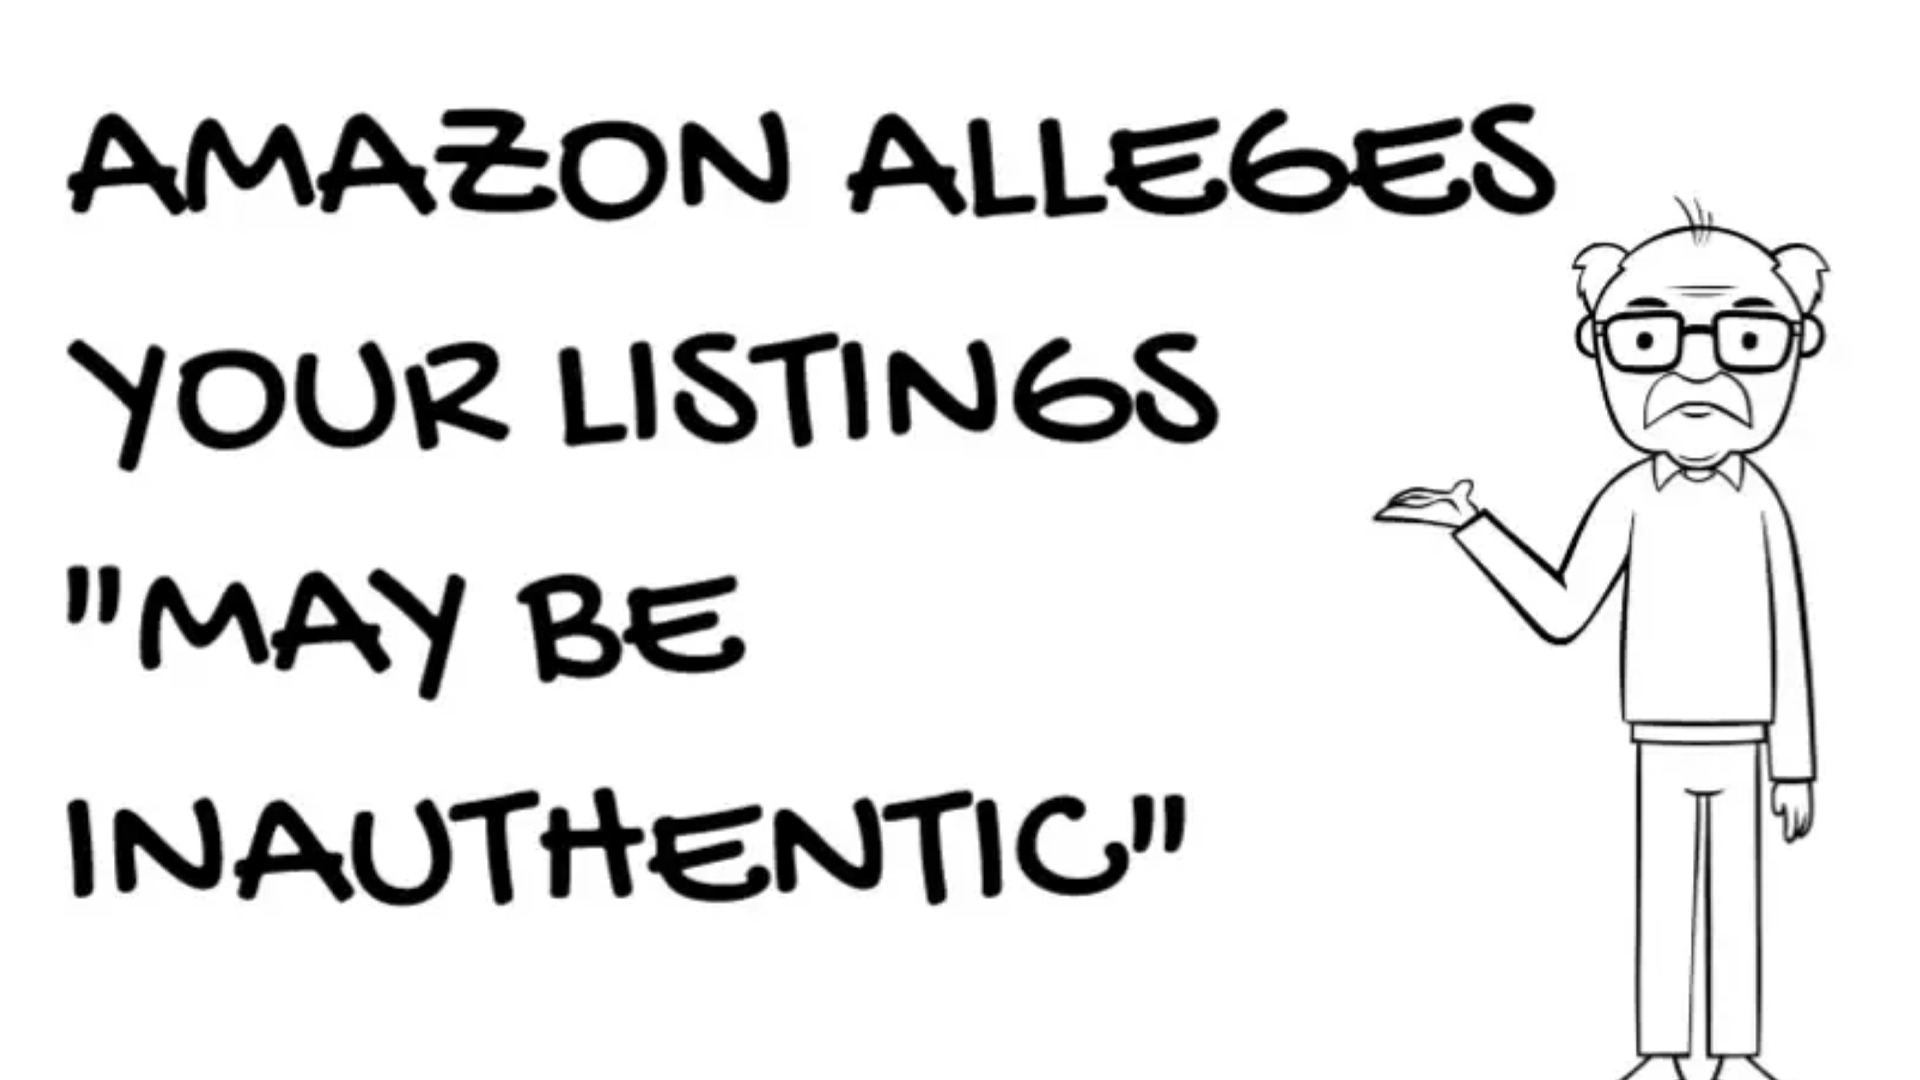 Inauthentic Suspensions on Amazon